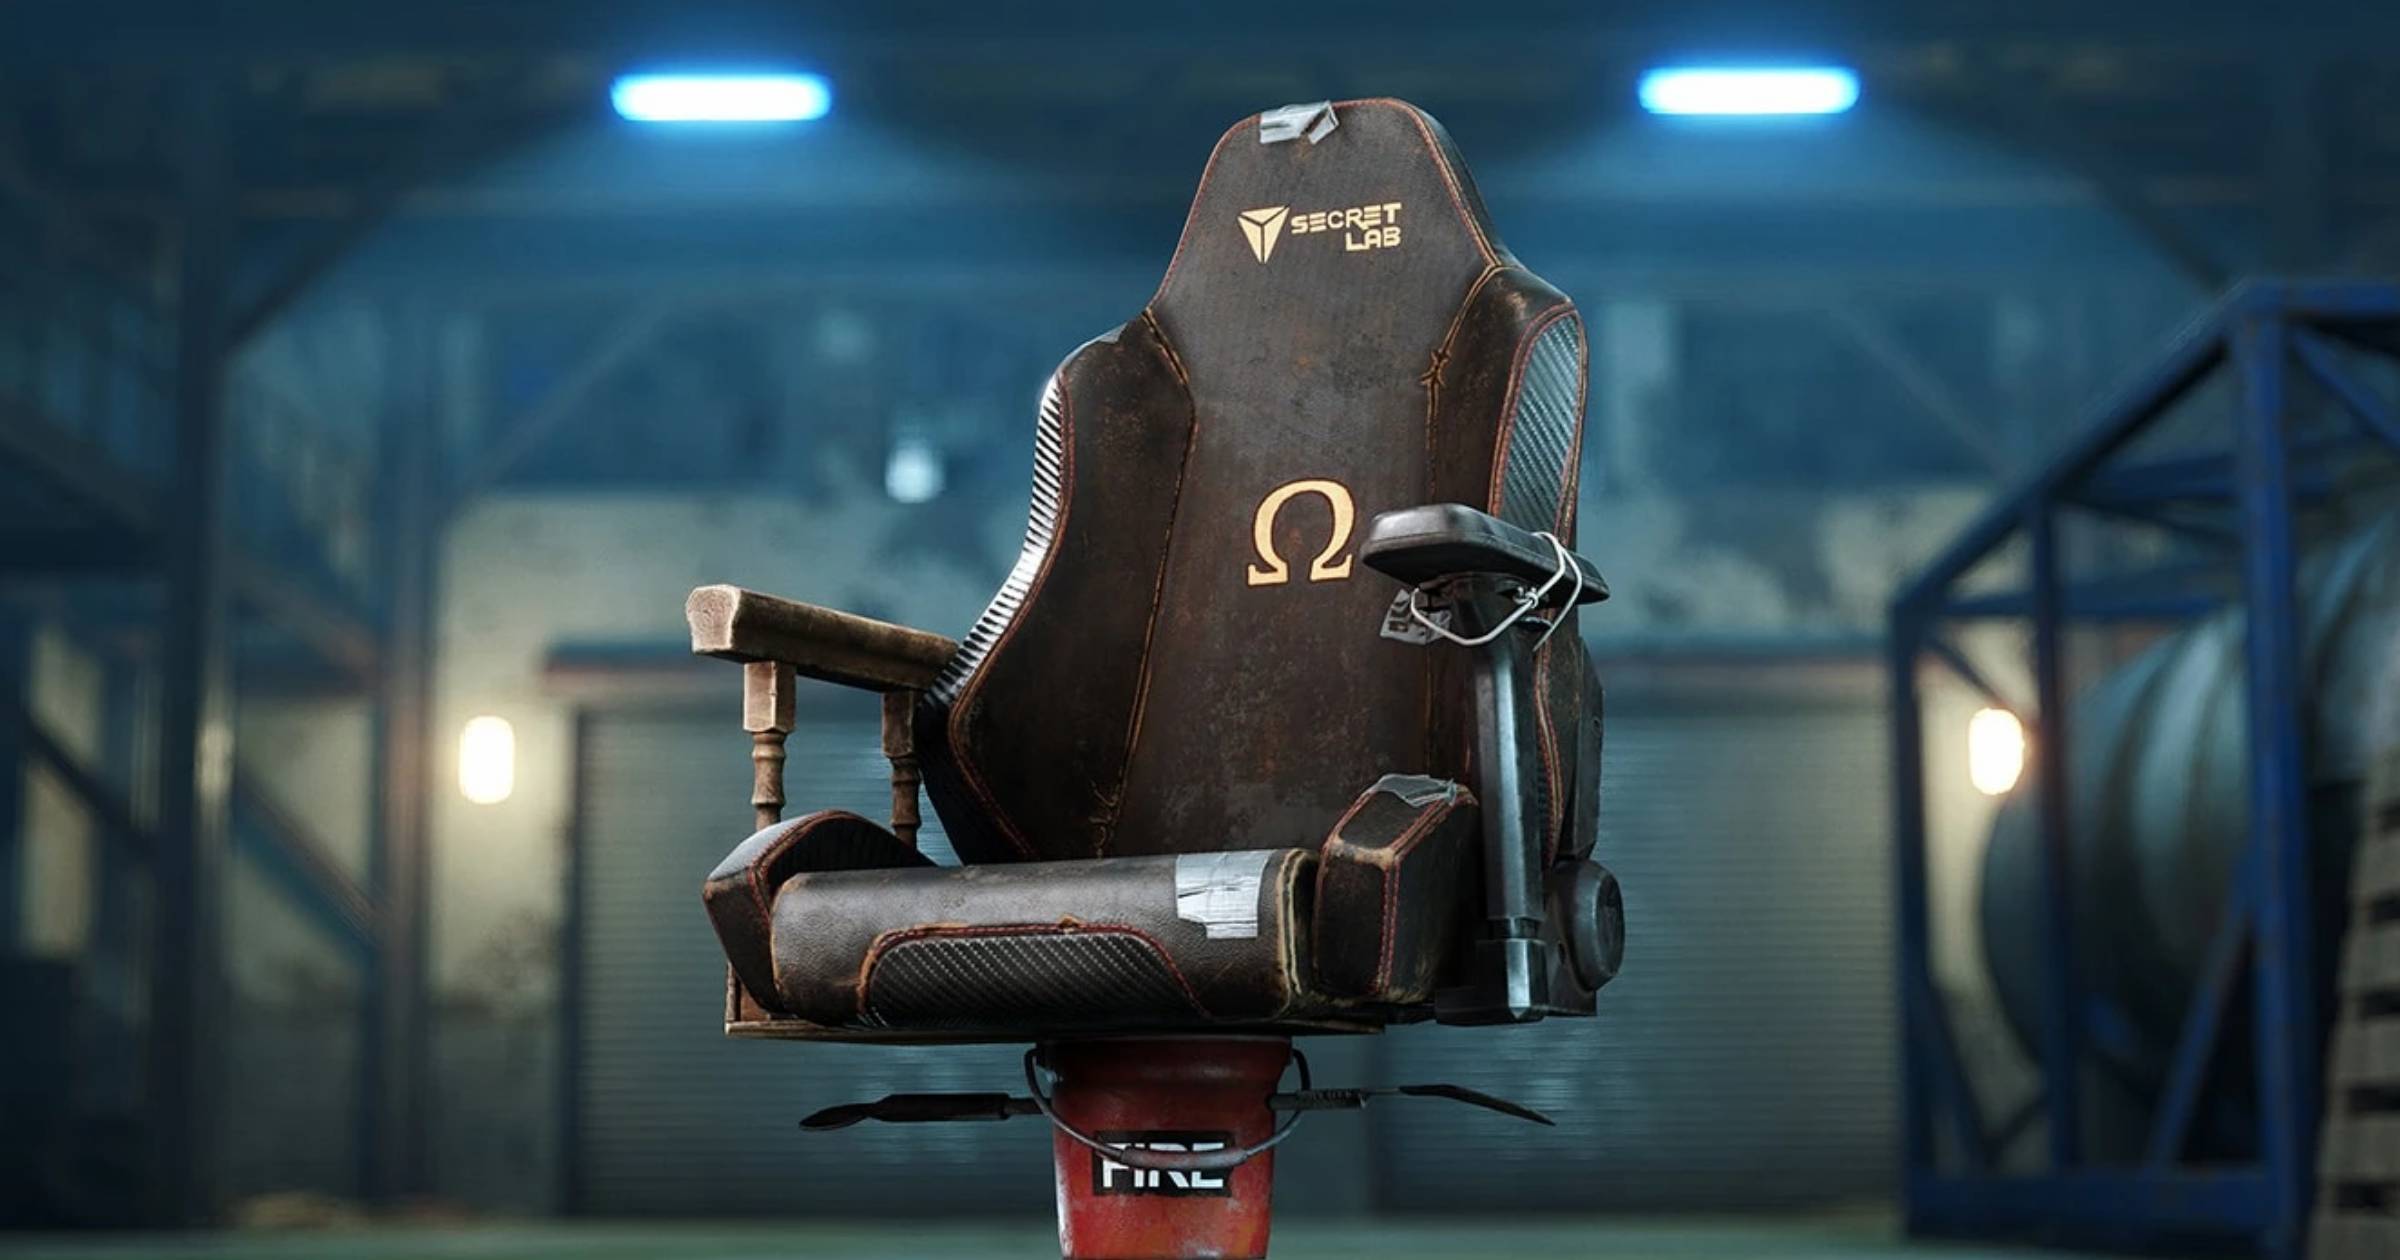 Are Secretlab Chairs Good? Secretlab Rust Edition Gaming Chair